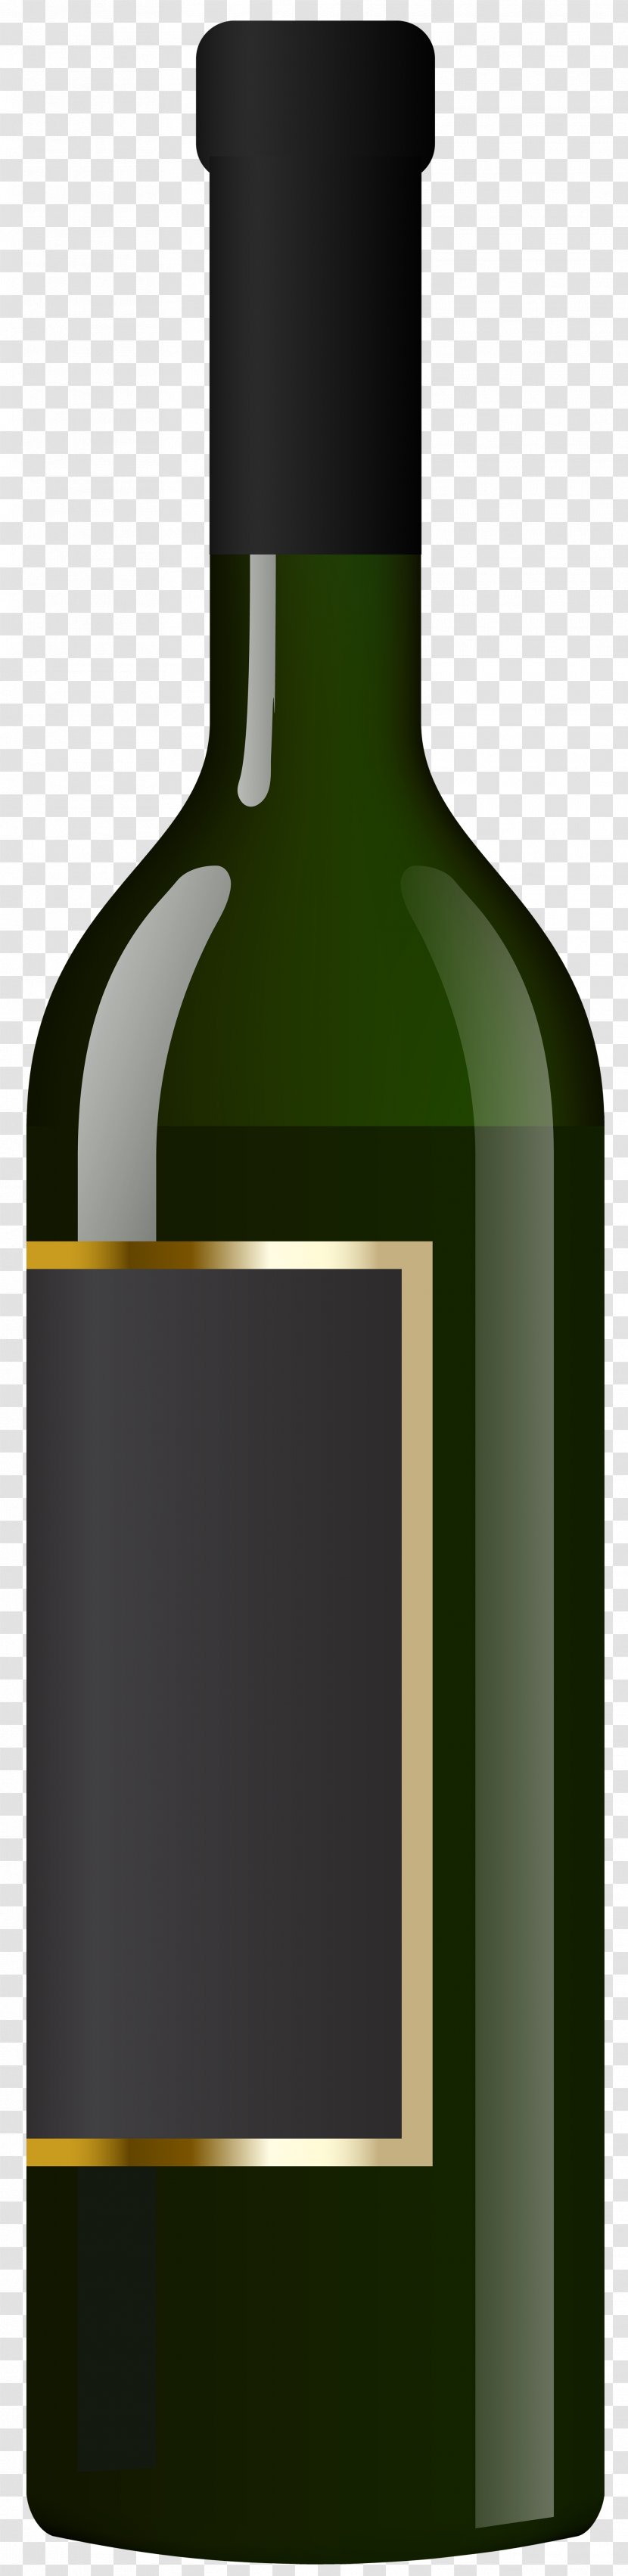 Red Wine White Bottle Clip Art - Tableware - Transparent Image Transparent PNG